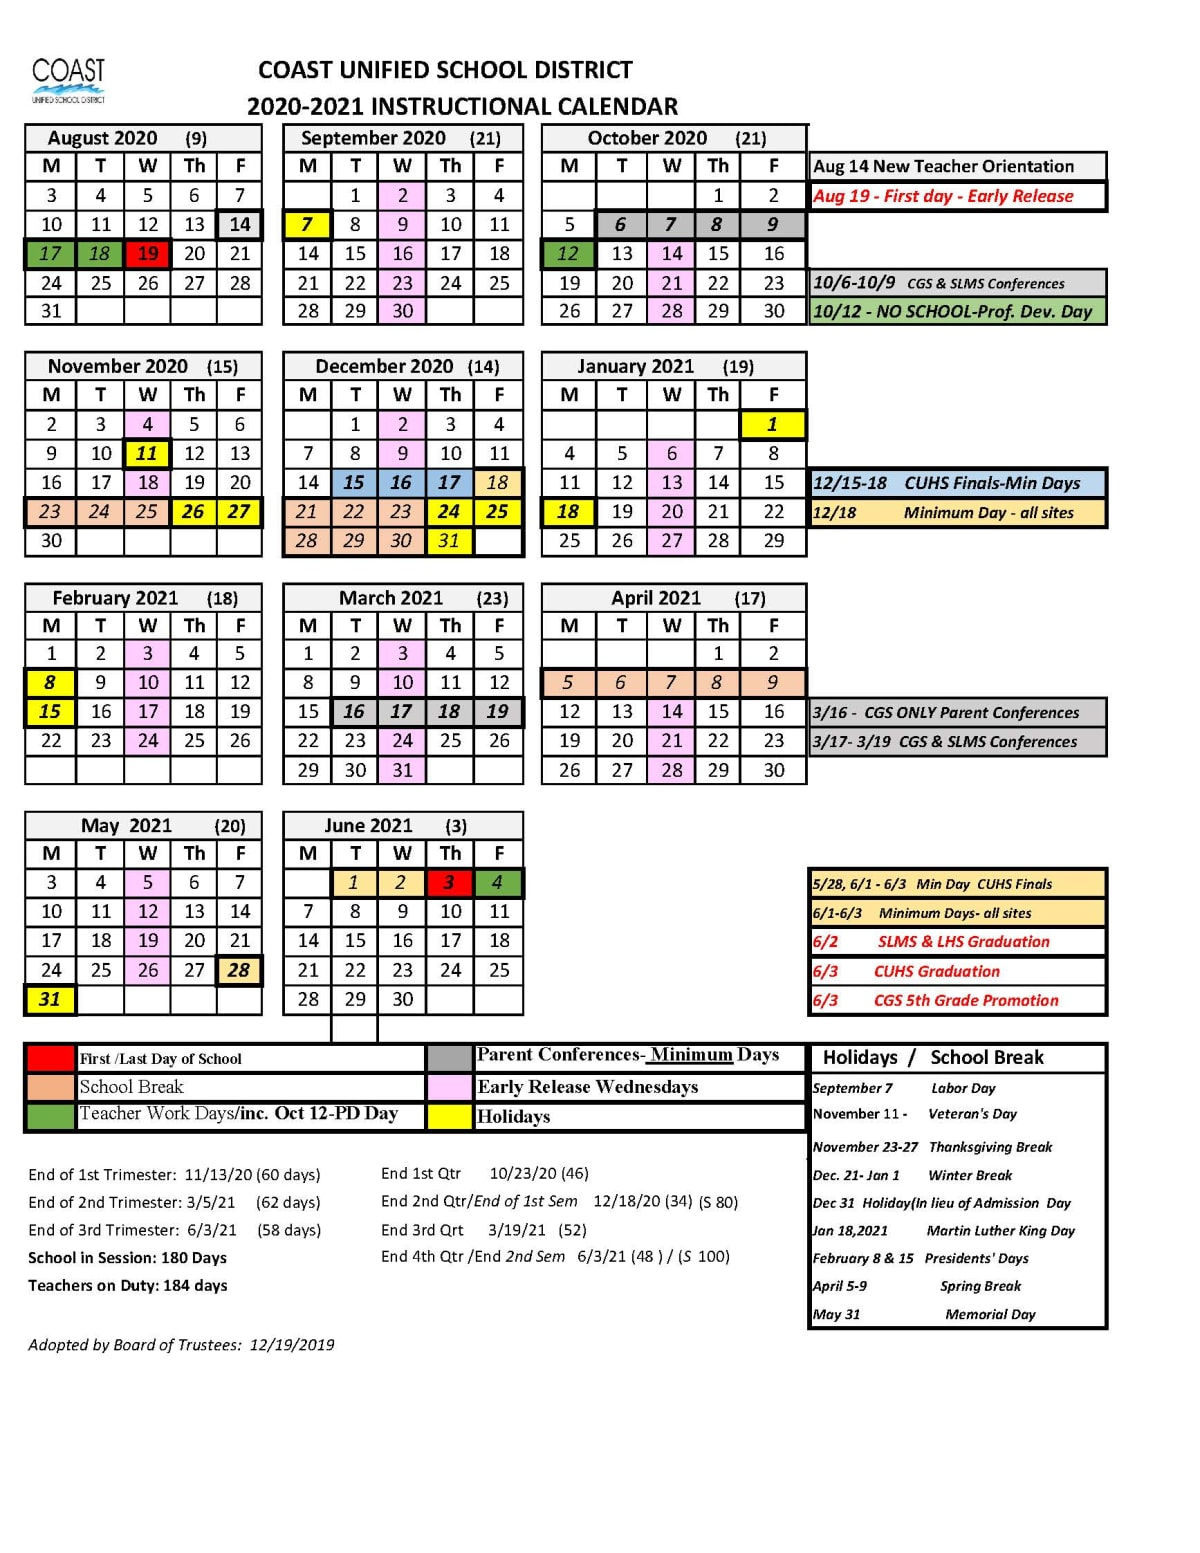 carlsbad-school-district-calendar-2023-schoolcalendars